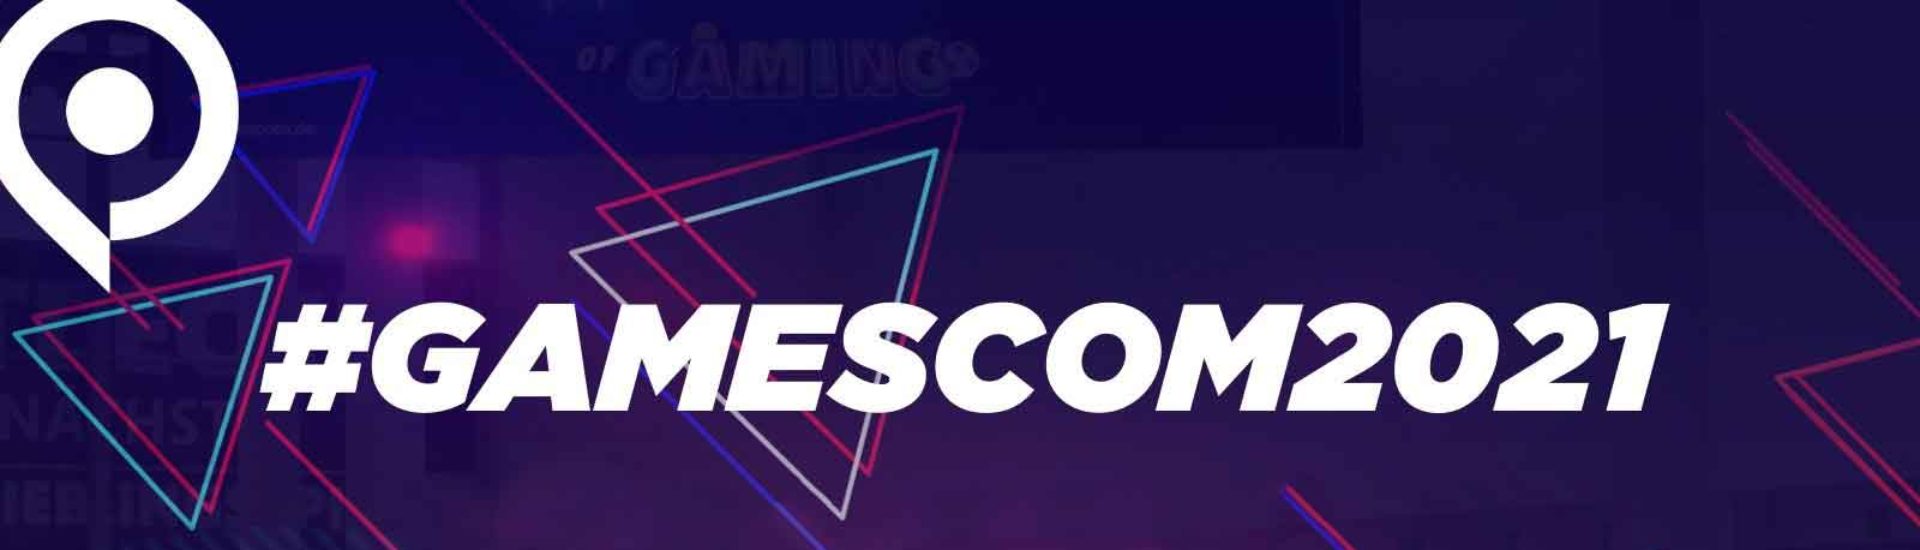 Gamescom 2021: Alle Infos zur digitalen Messe